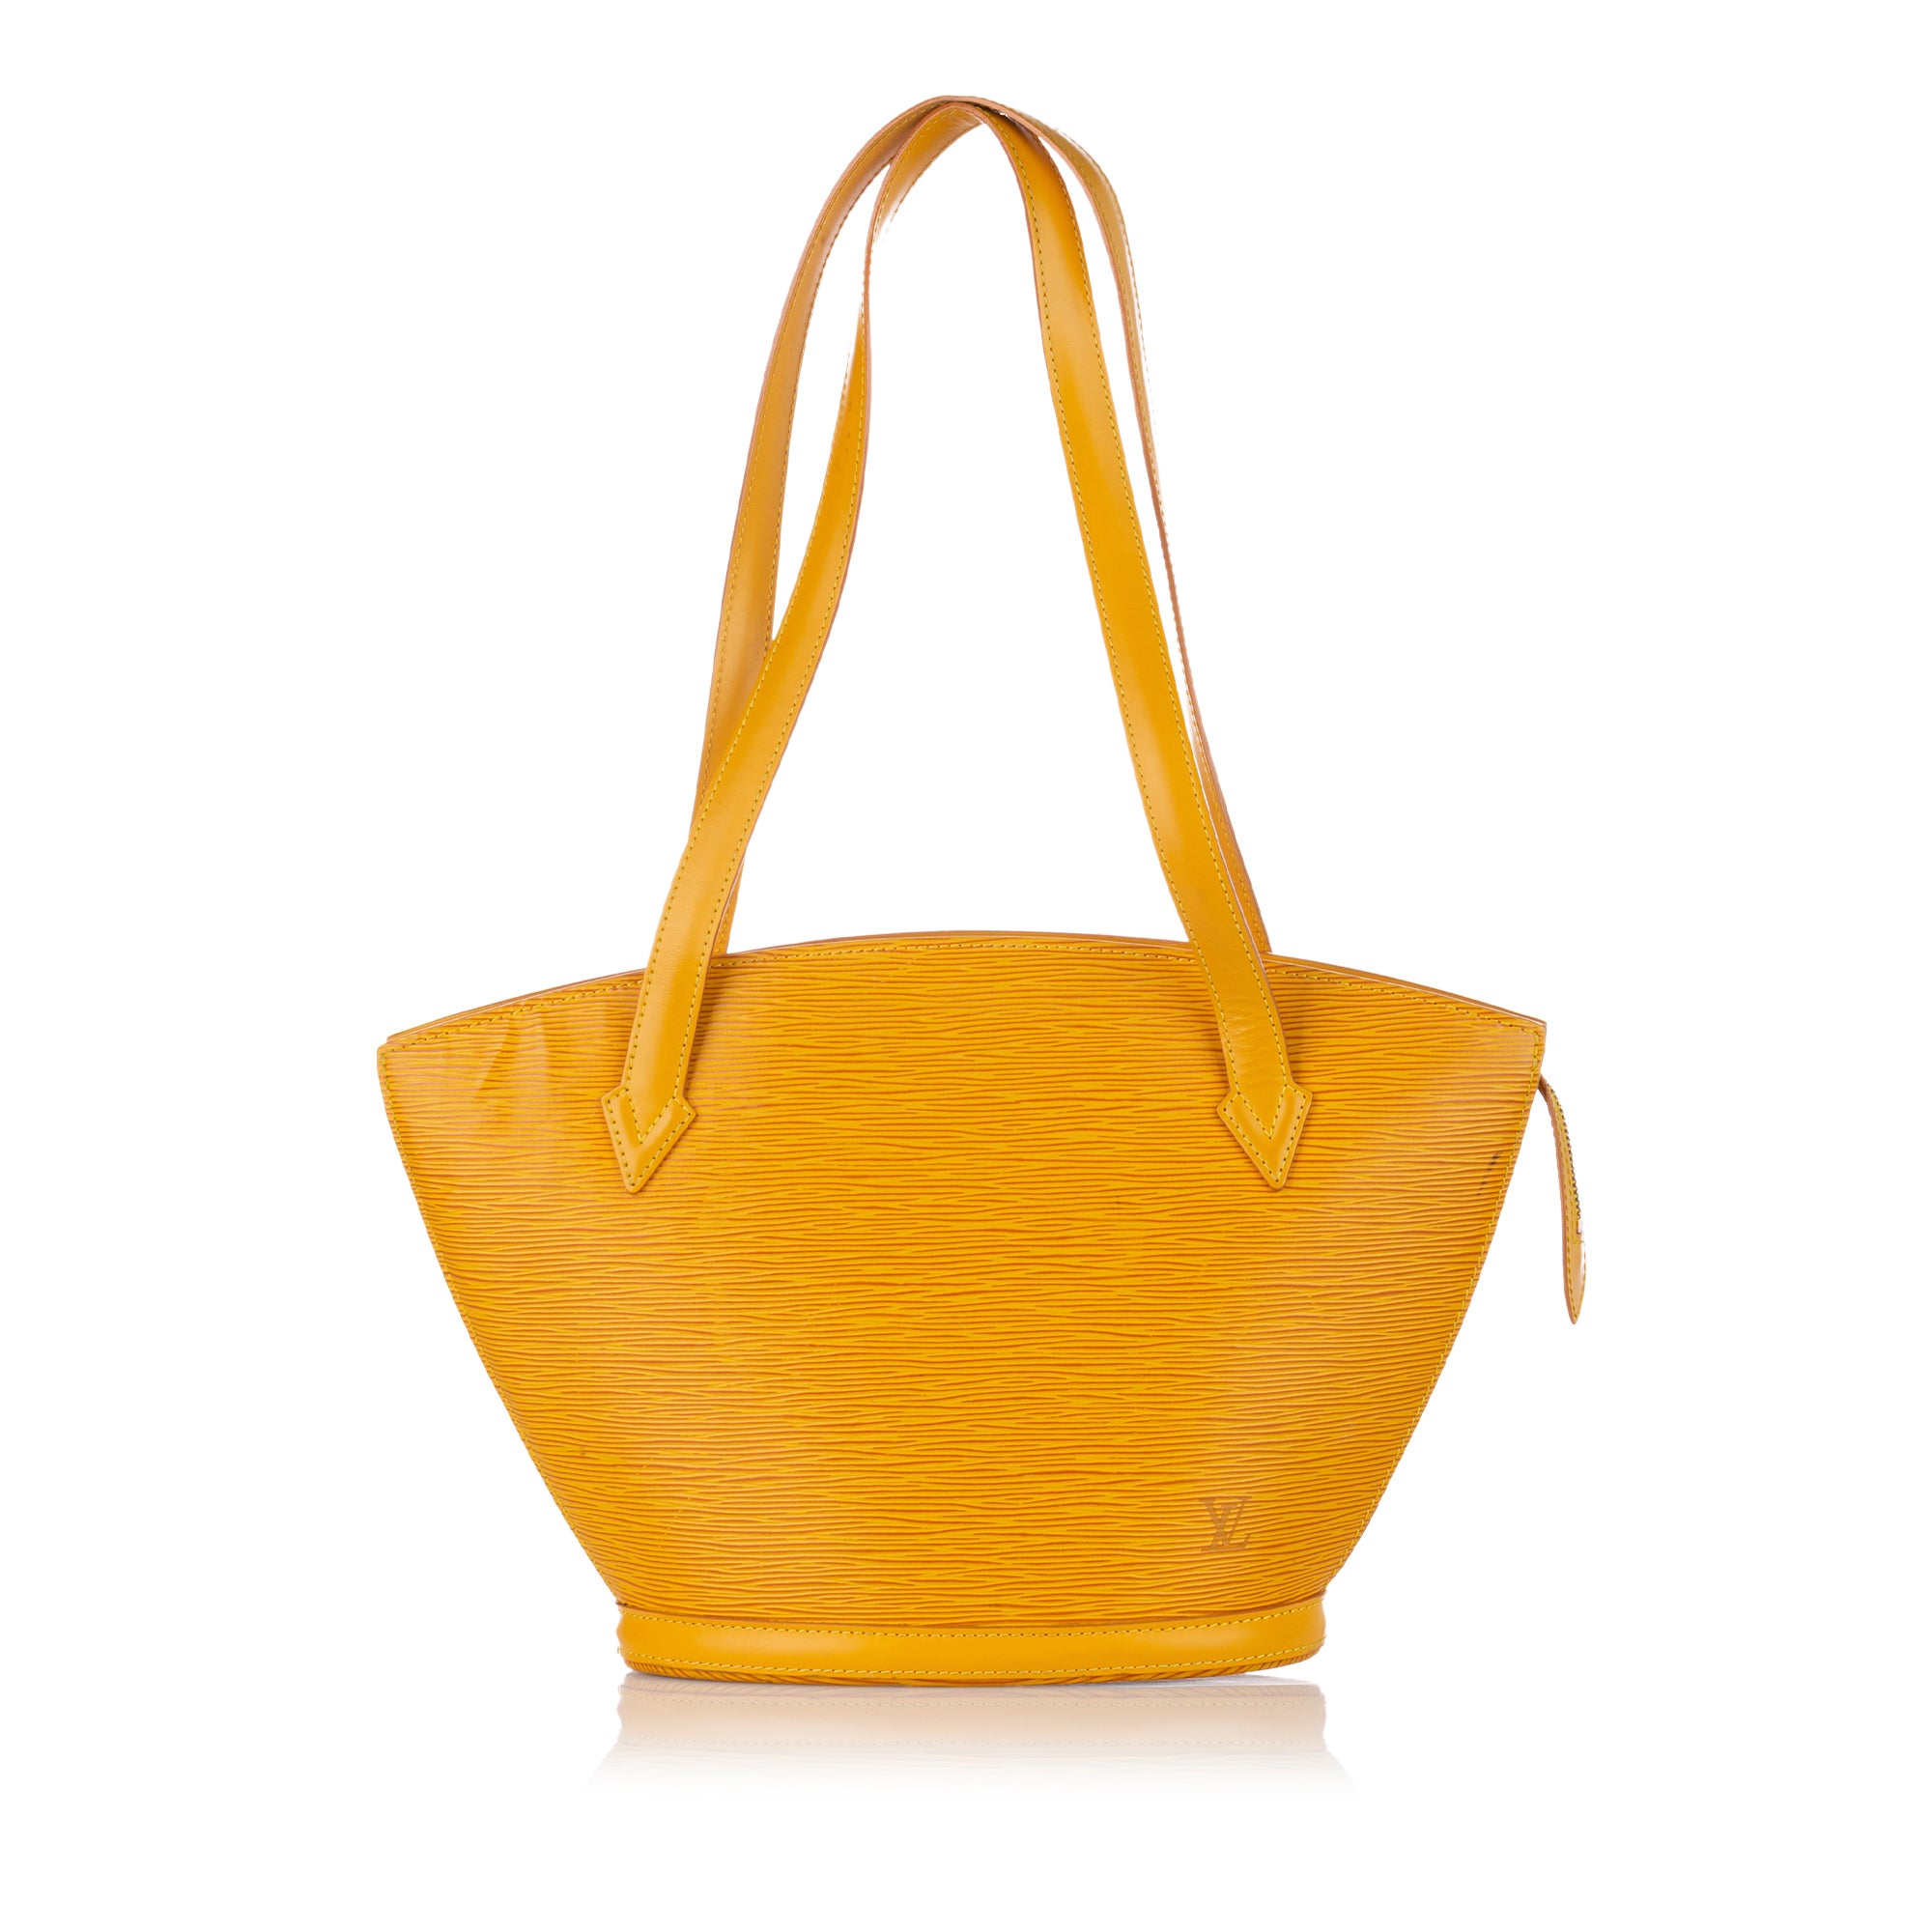 Selena Gomez Style. - Louis Vuitton Lumineuse PM Handbag